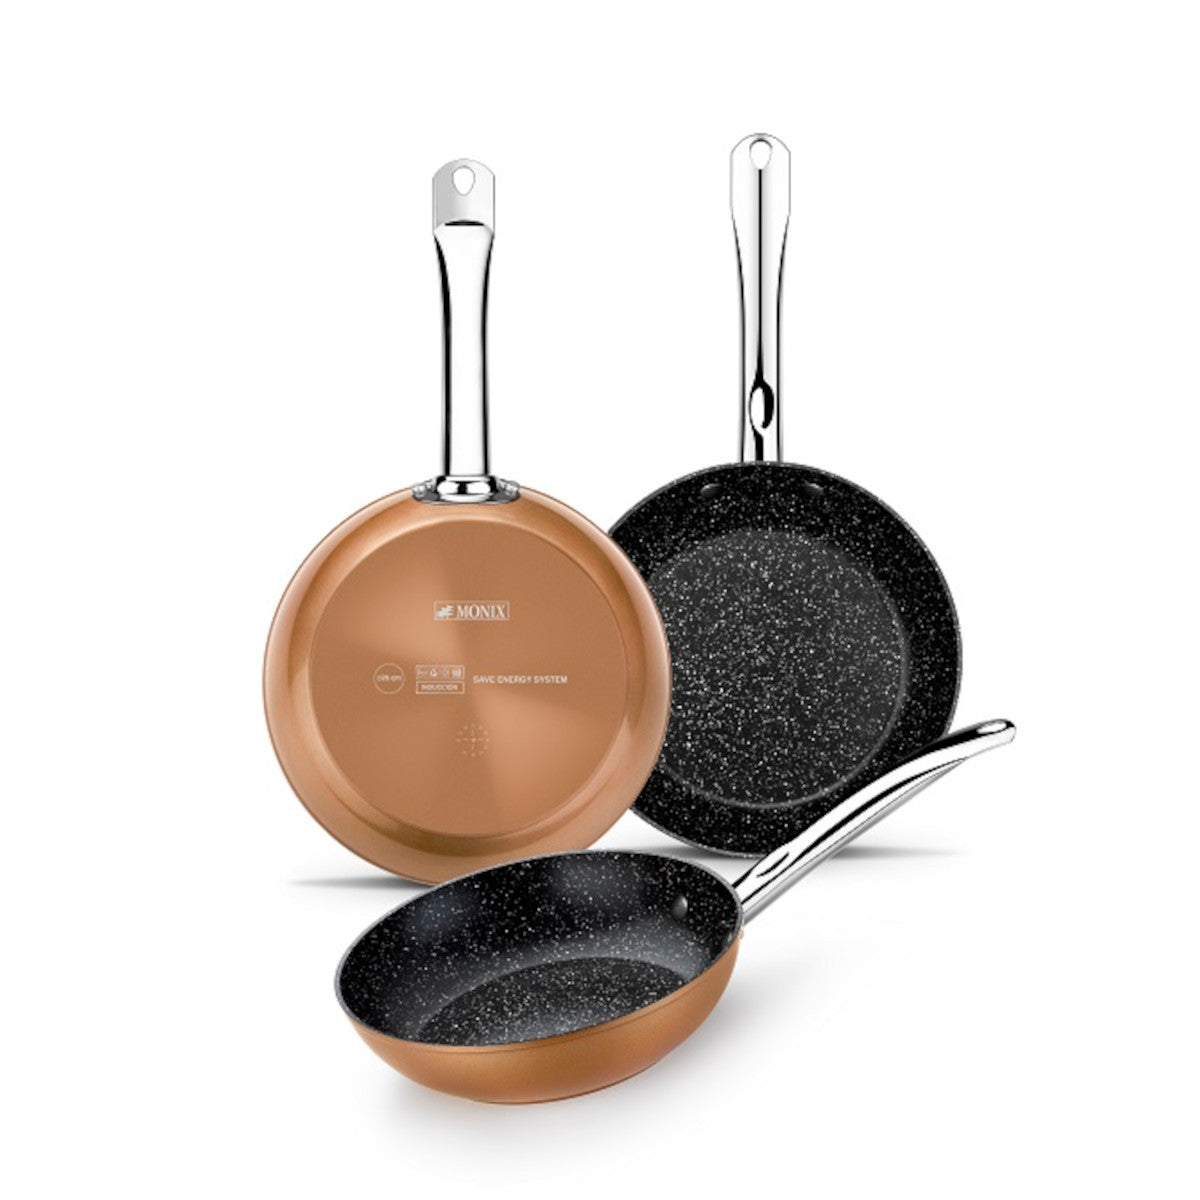 Copper Frying Pan, 3-piece set